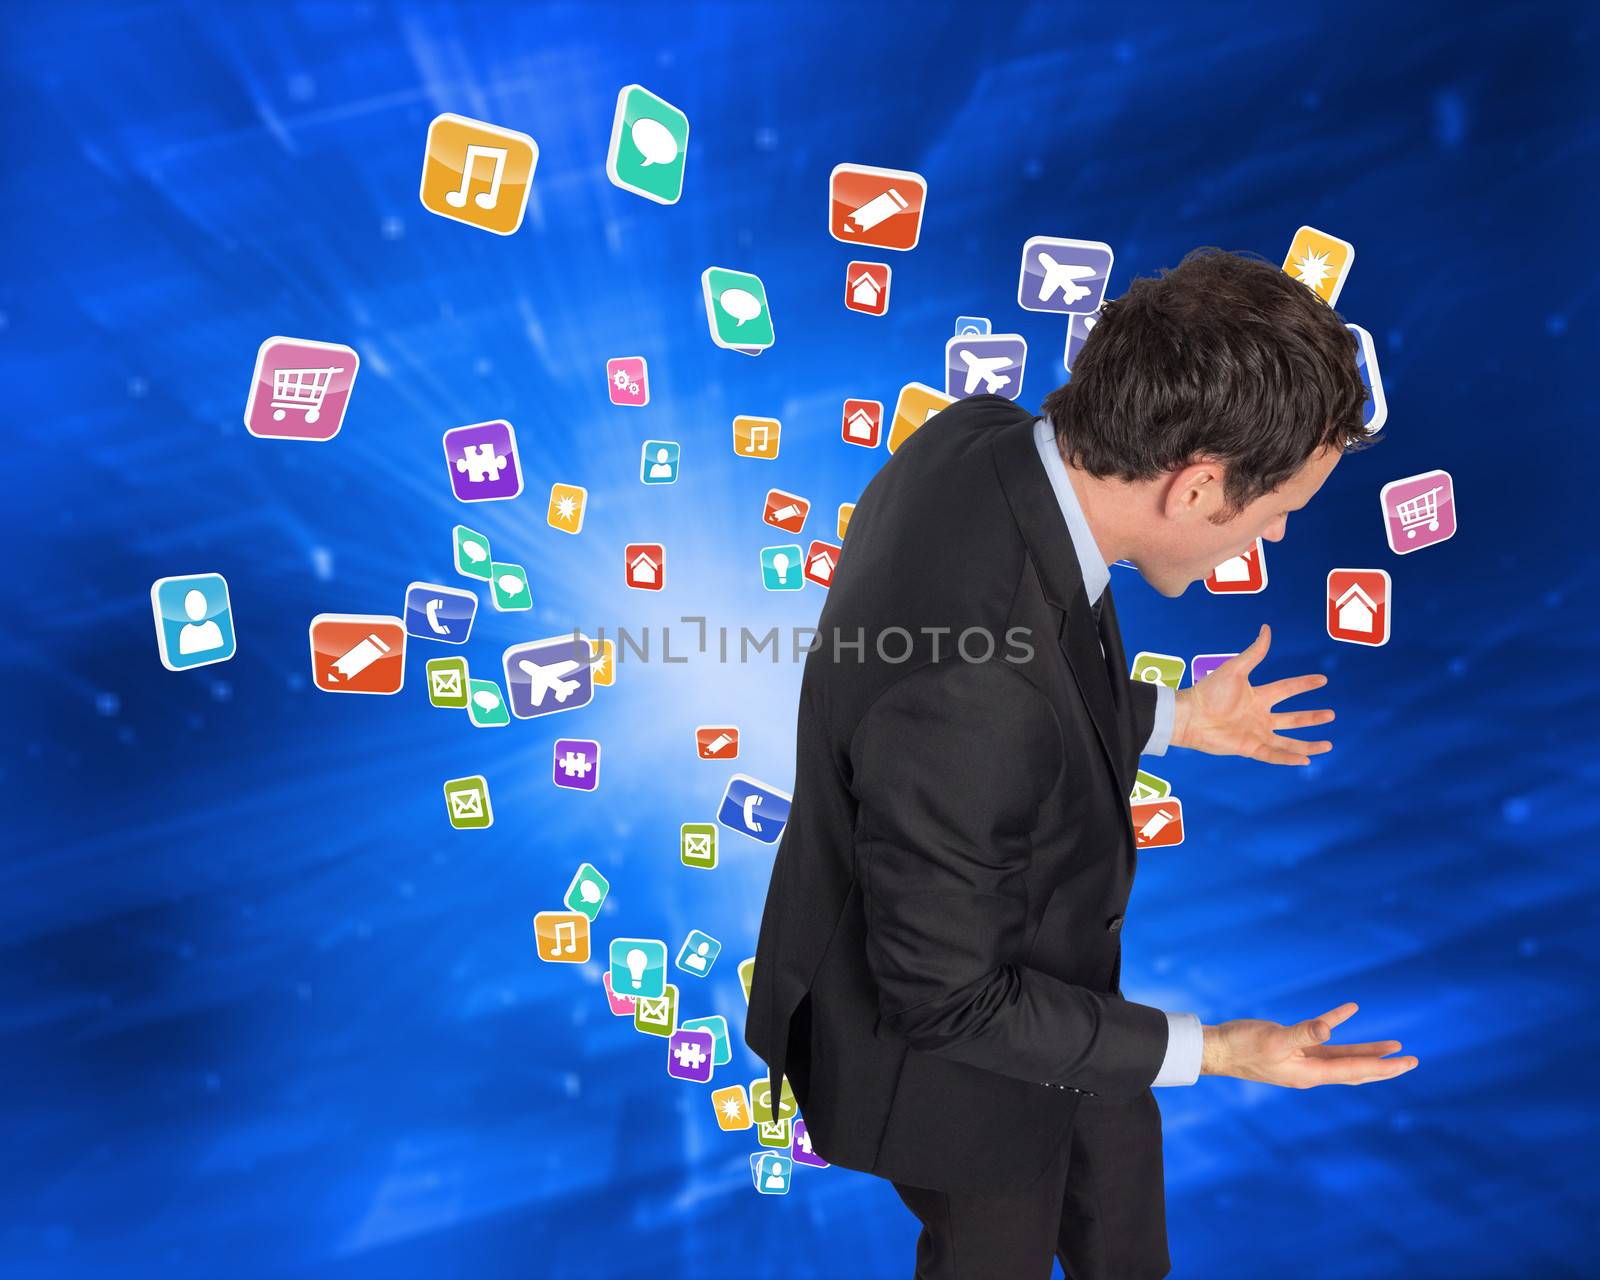 Composite image of stressed businessman gesturing by Wavebreakmedia